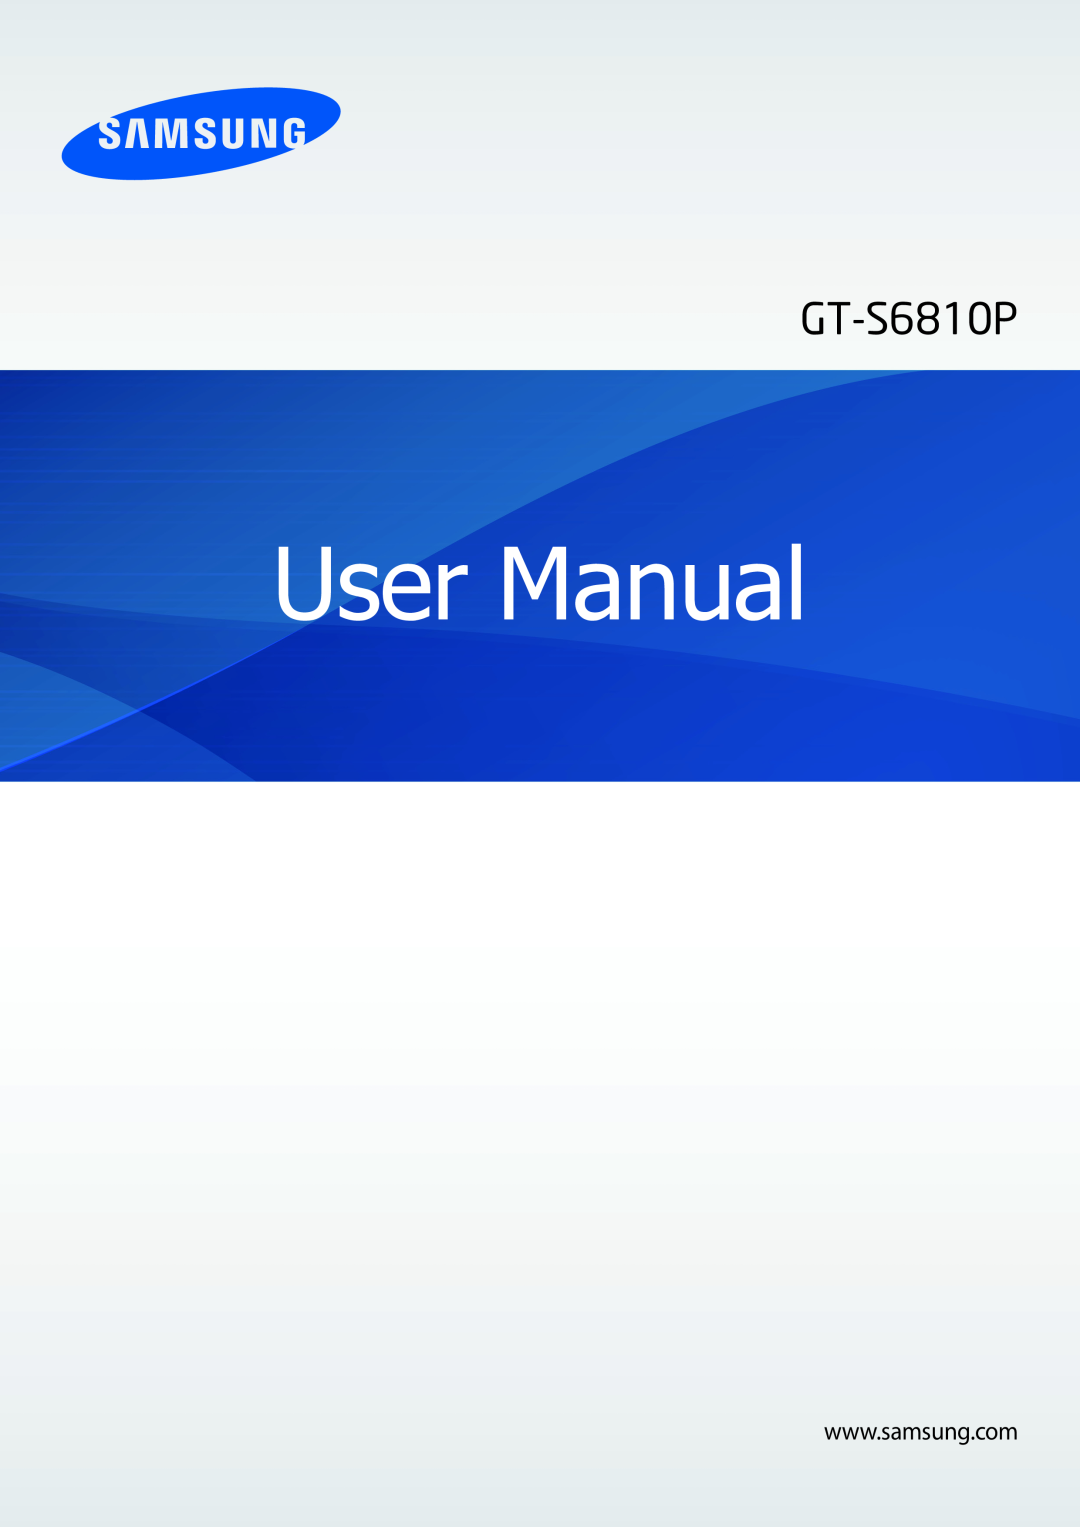 Samsung GT-S6810PWNDTM, GT-S6810PWNTUR, GT-S6810PWNDBT, GT-S6810MBNTUR, GT-S6810MBNDBT, GT-S6810MBNEUR manual User Manual 